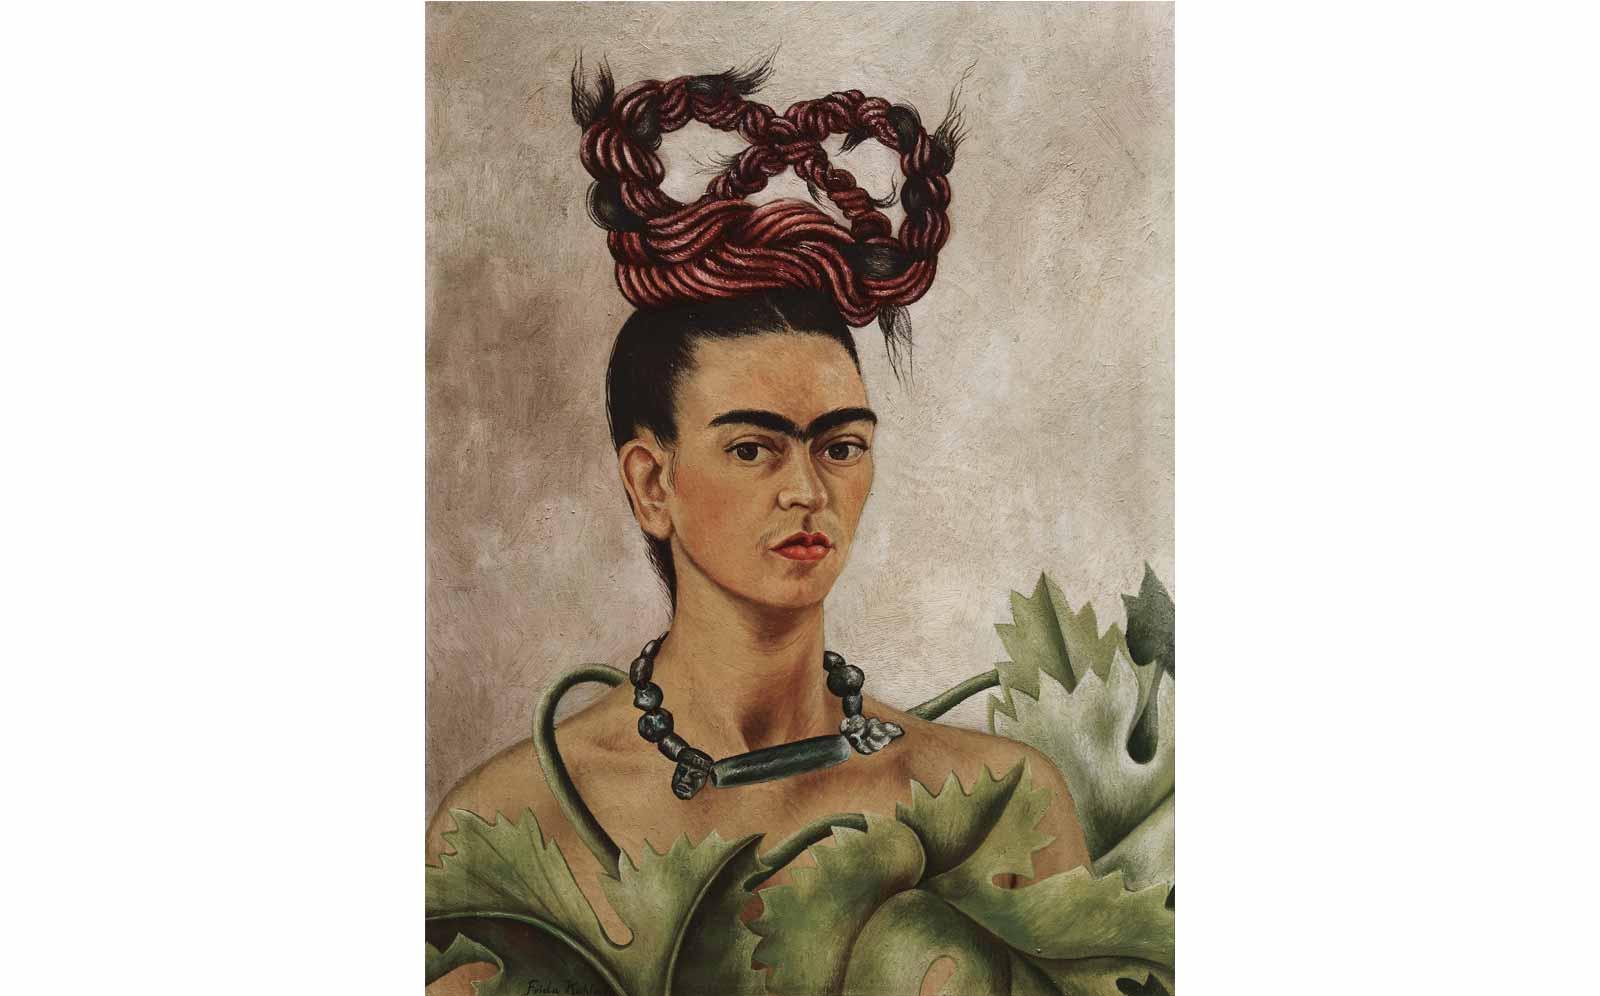 Frida Kahlo, Self-Portrait with Braid, 1941.